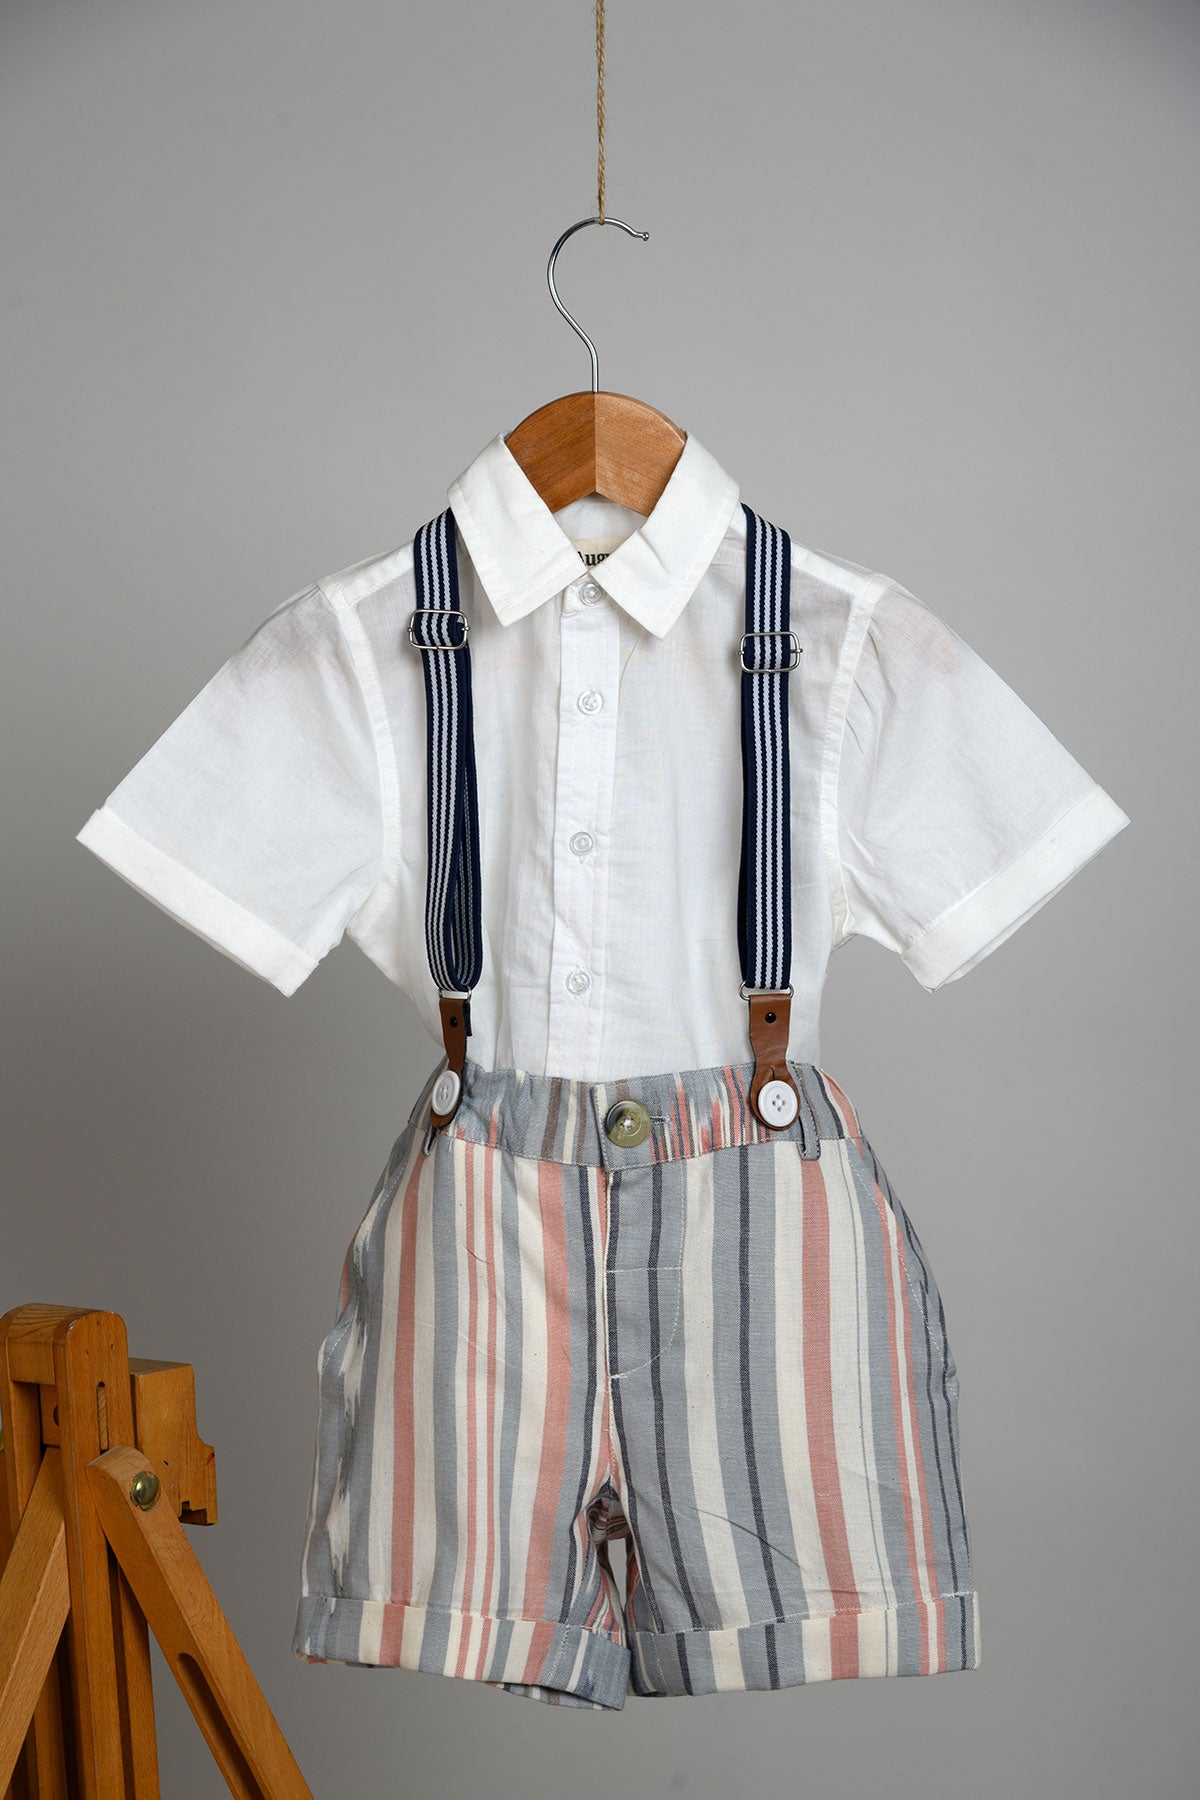 Ladla Organic cotton Ikat Shorts, Half Shirt and Suspenders Set - Grey